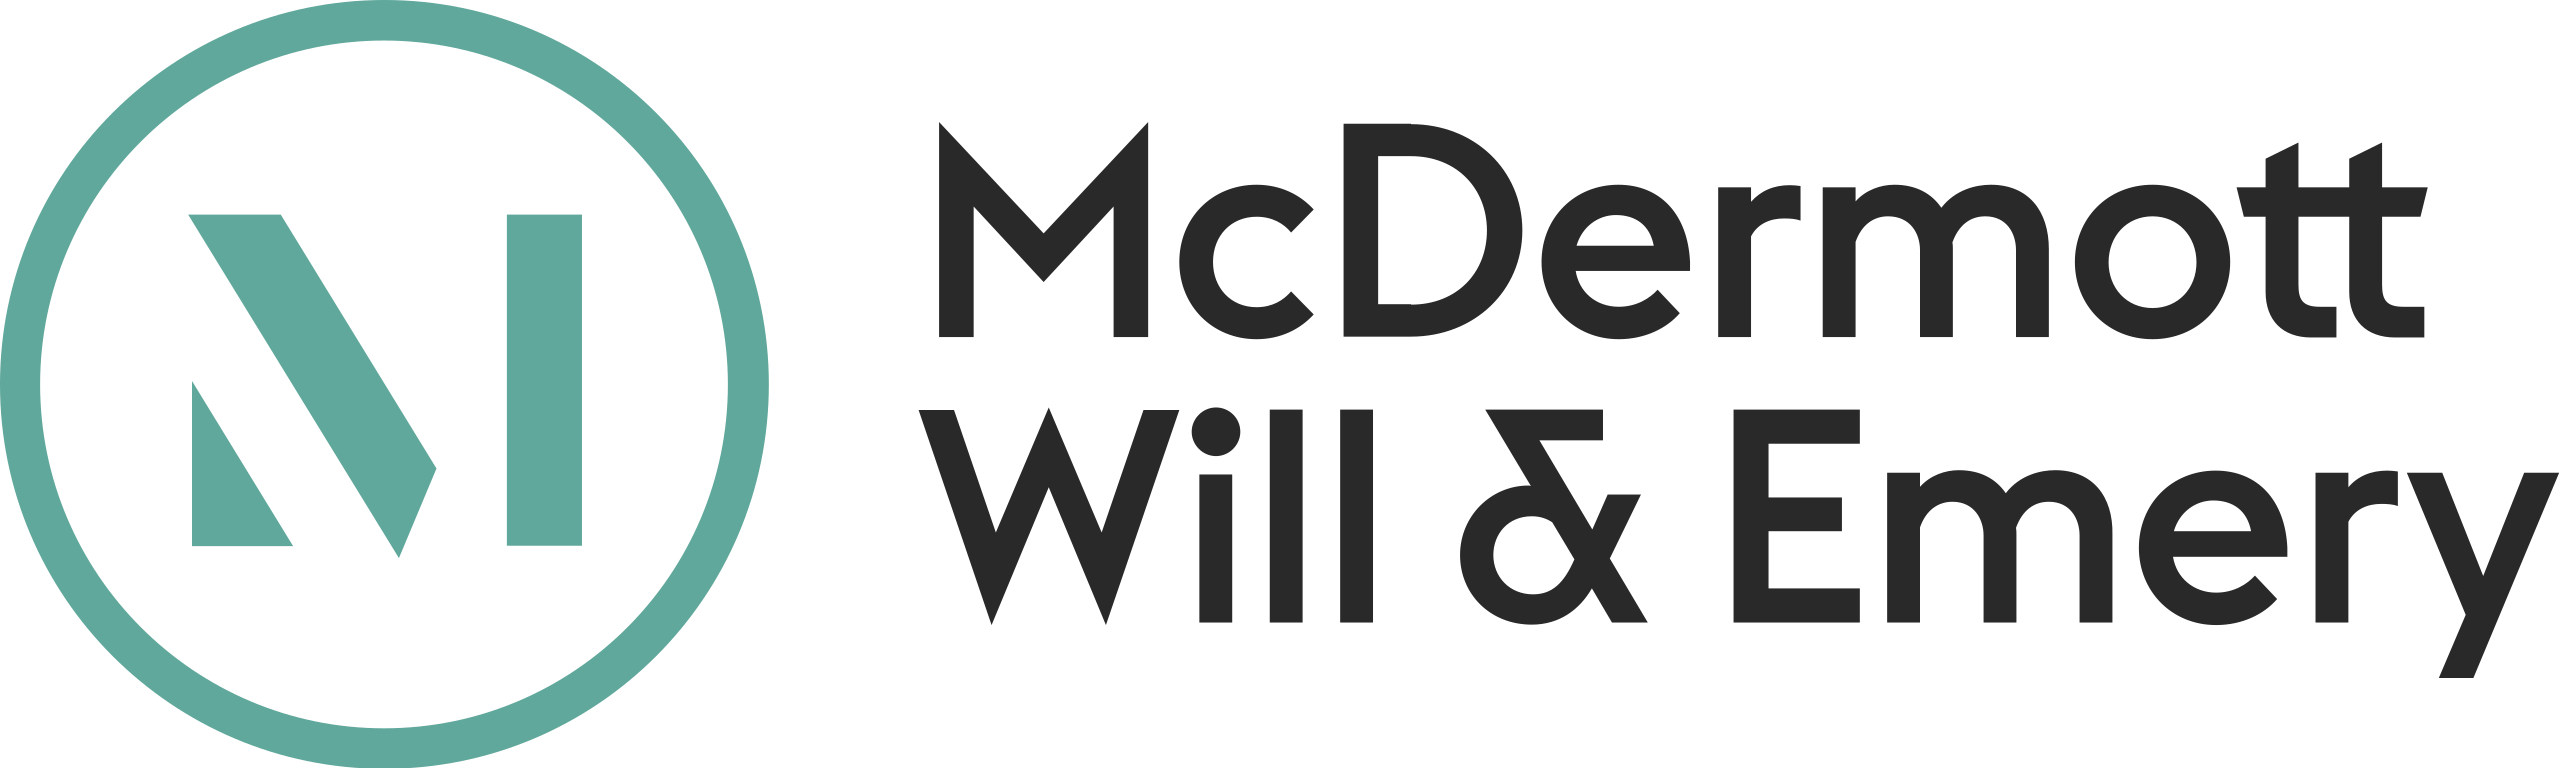 McDermott_Will_&_Emery_logo.svg